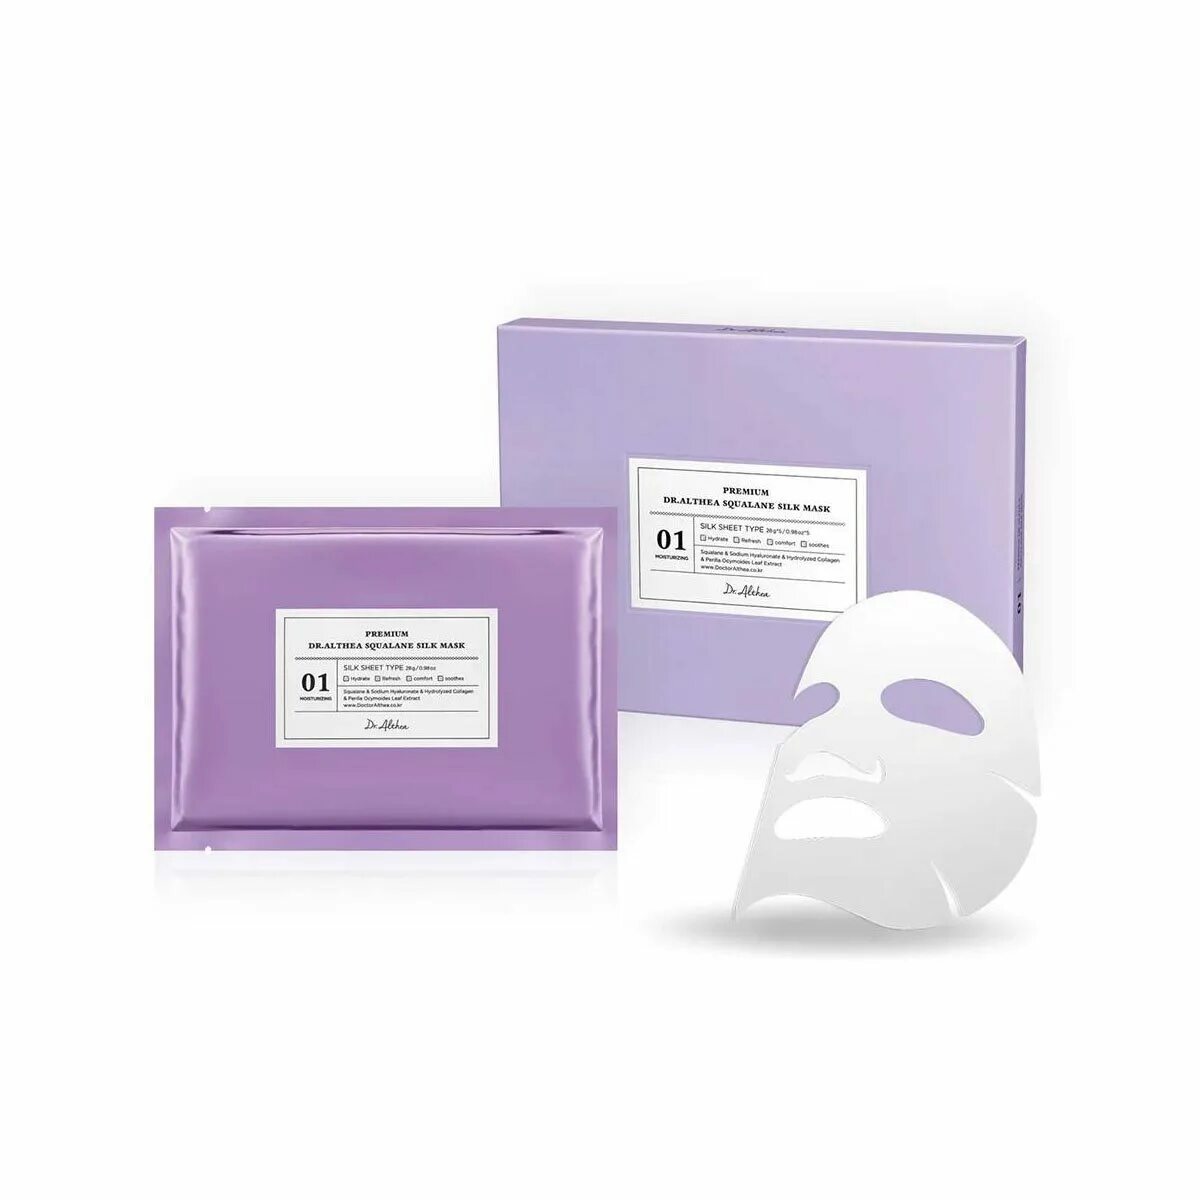 [Dr. Althea] тканевая маска для лица сквалан Premium Dr. Althea Squalane Silk Mask, 5 шт. Dr Althea тканевая маска увлажняющая. Dr.Althea маска для лица увлажняющая Premium. Маска Dr Althea успокаивающая.